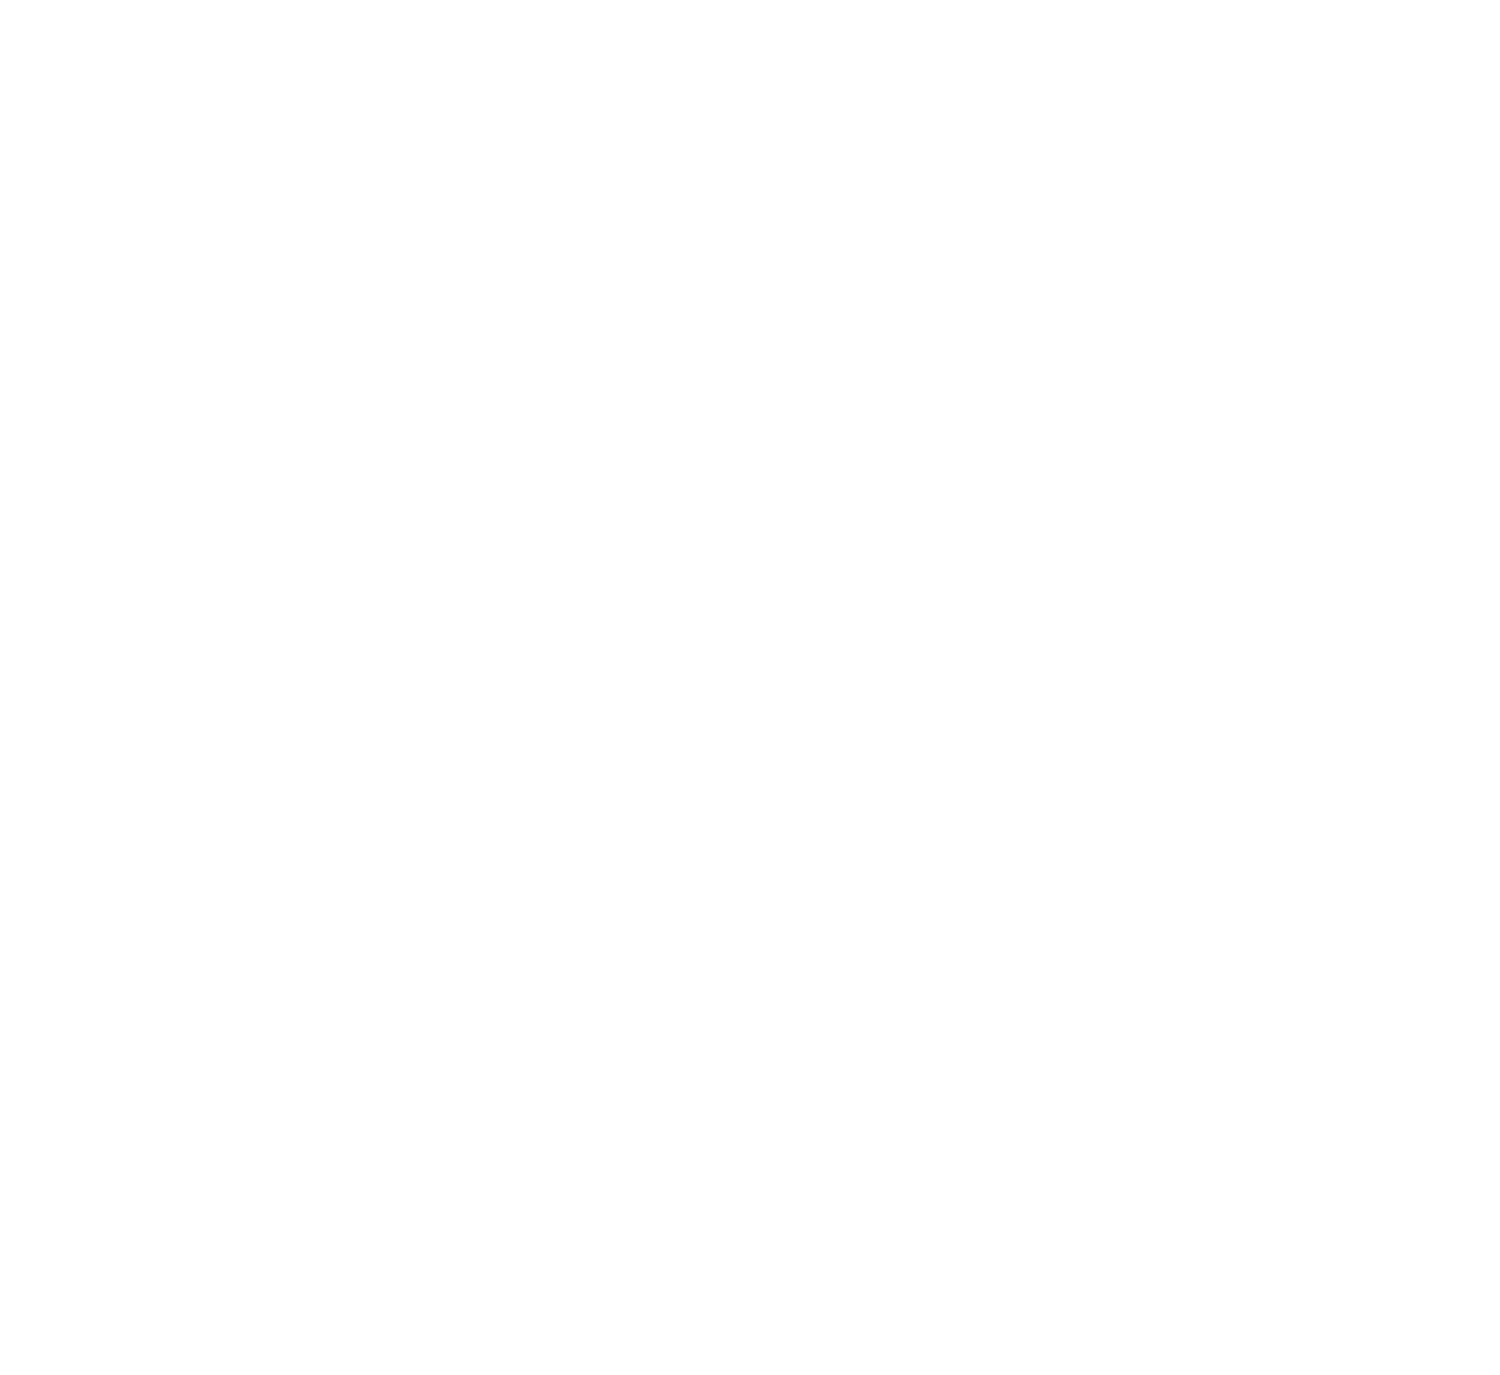 www.bigsurcamp.com